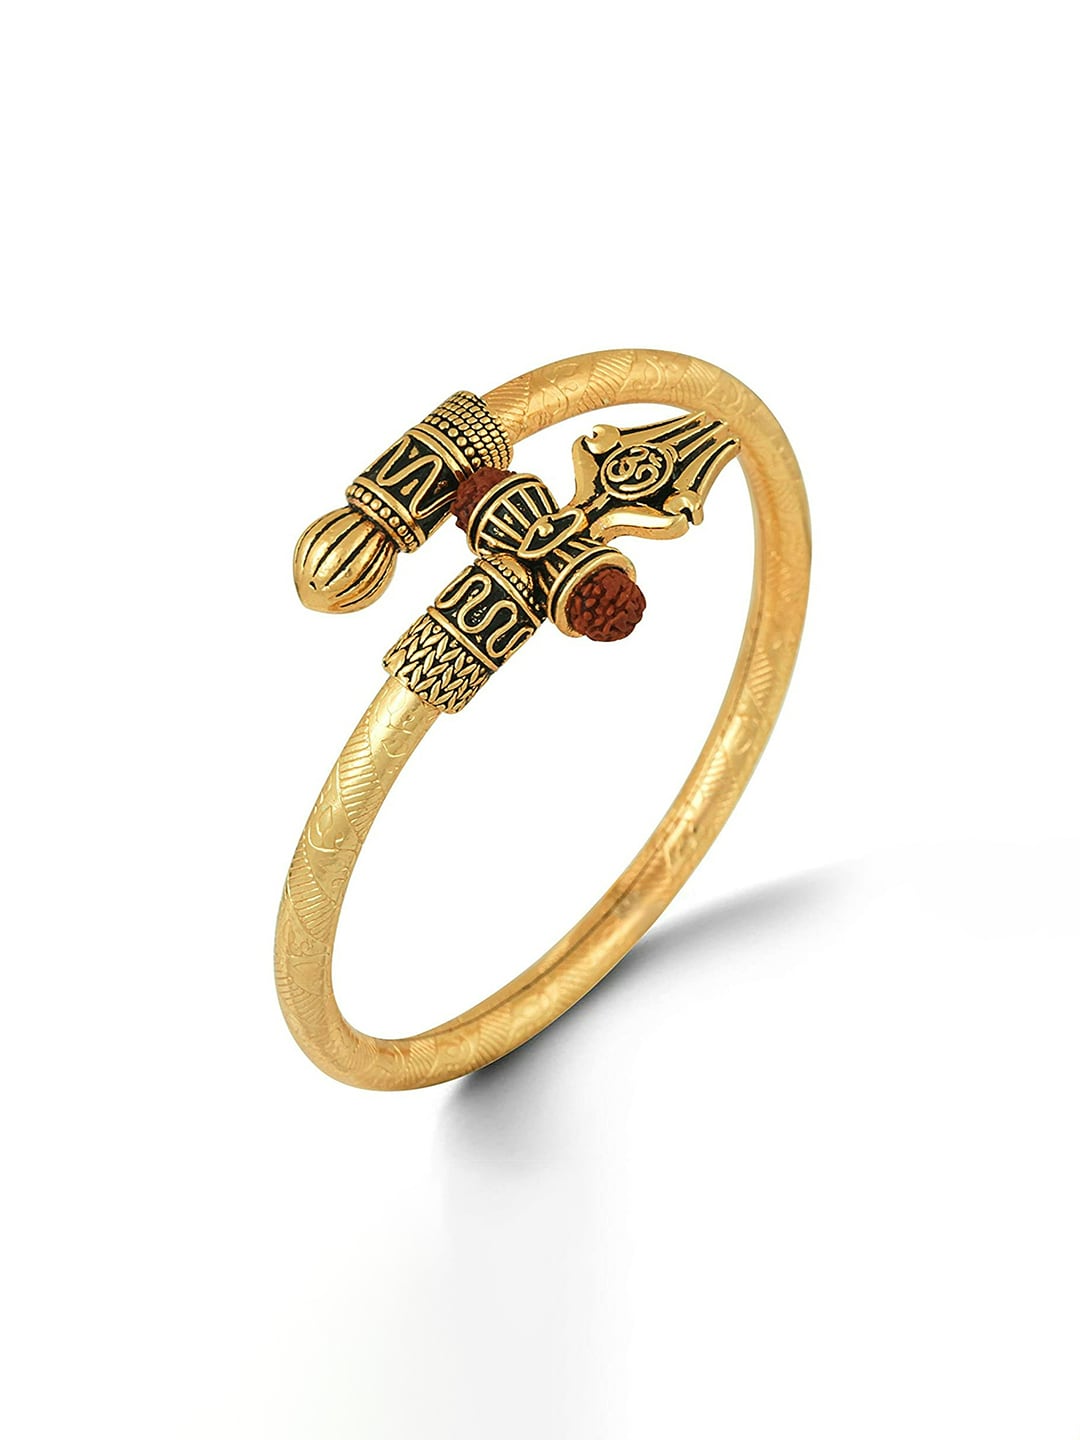 EL REGALO Men Gold-Toned & Brown Antique Kada Bracelet - for Men
Style ID: 16992396